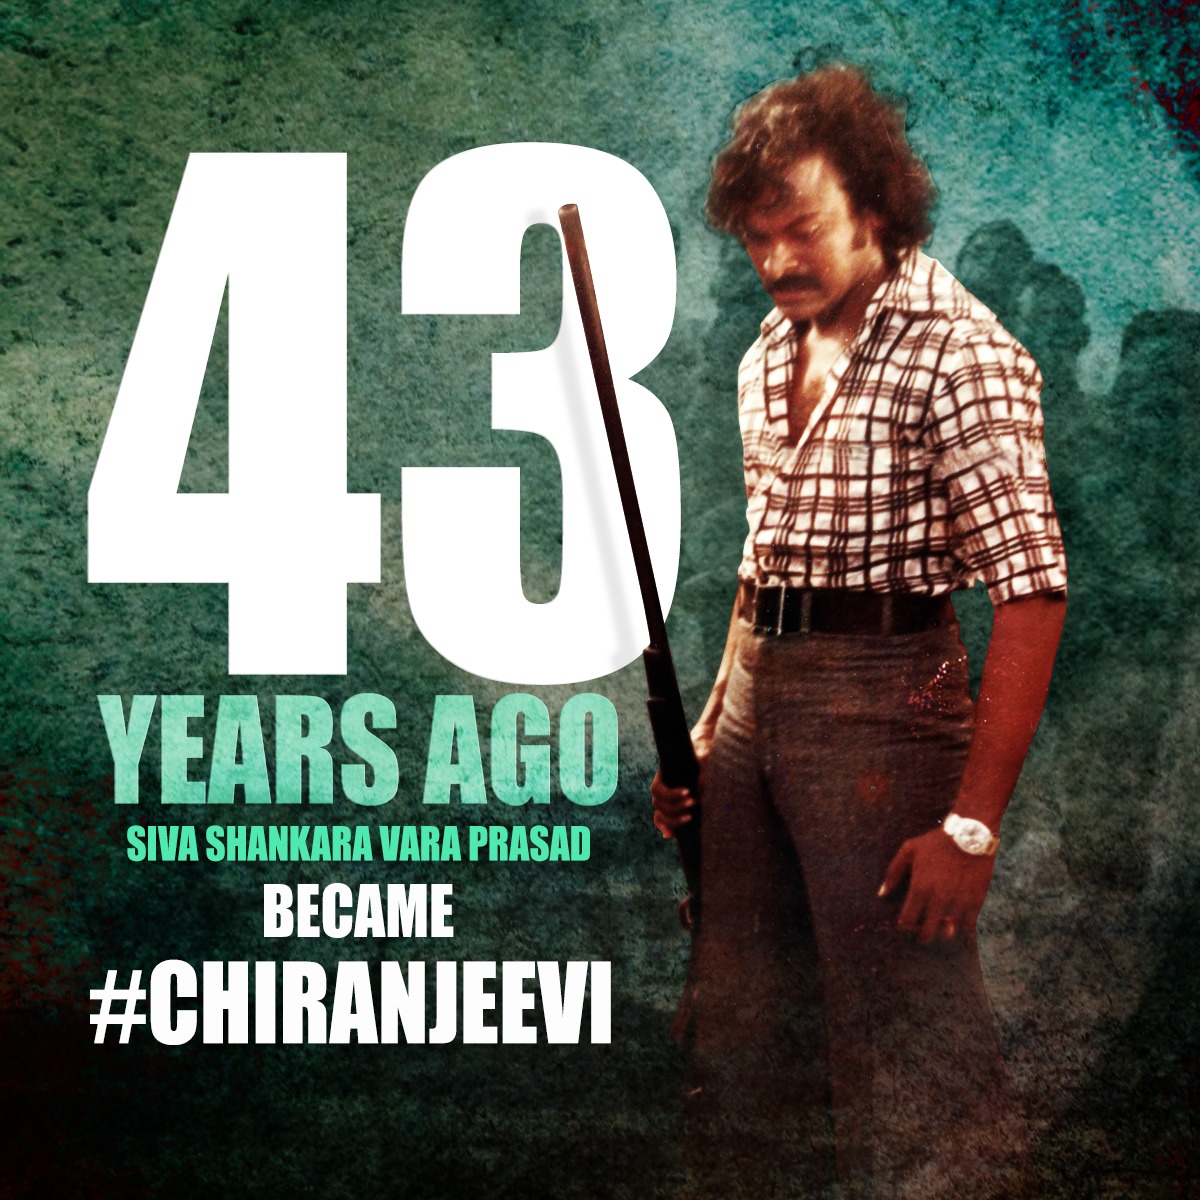 43 years for chiranjeevi career